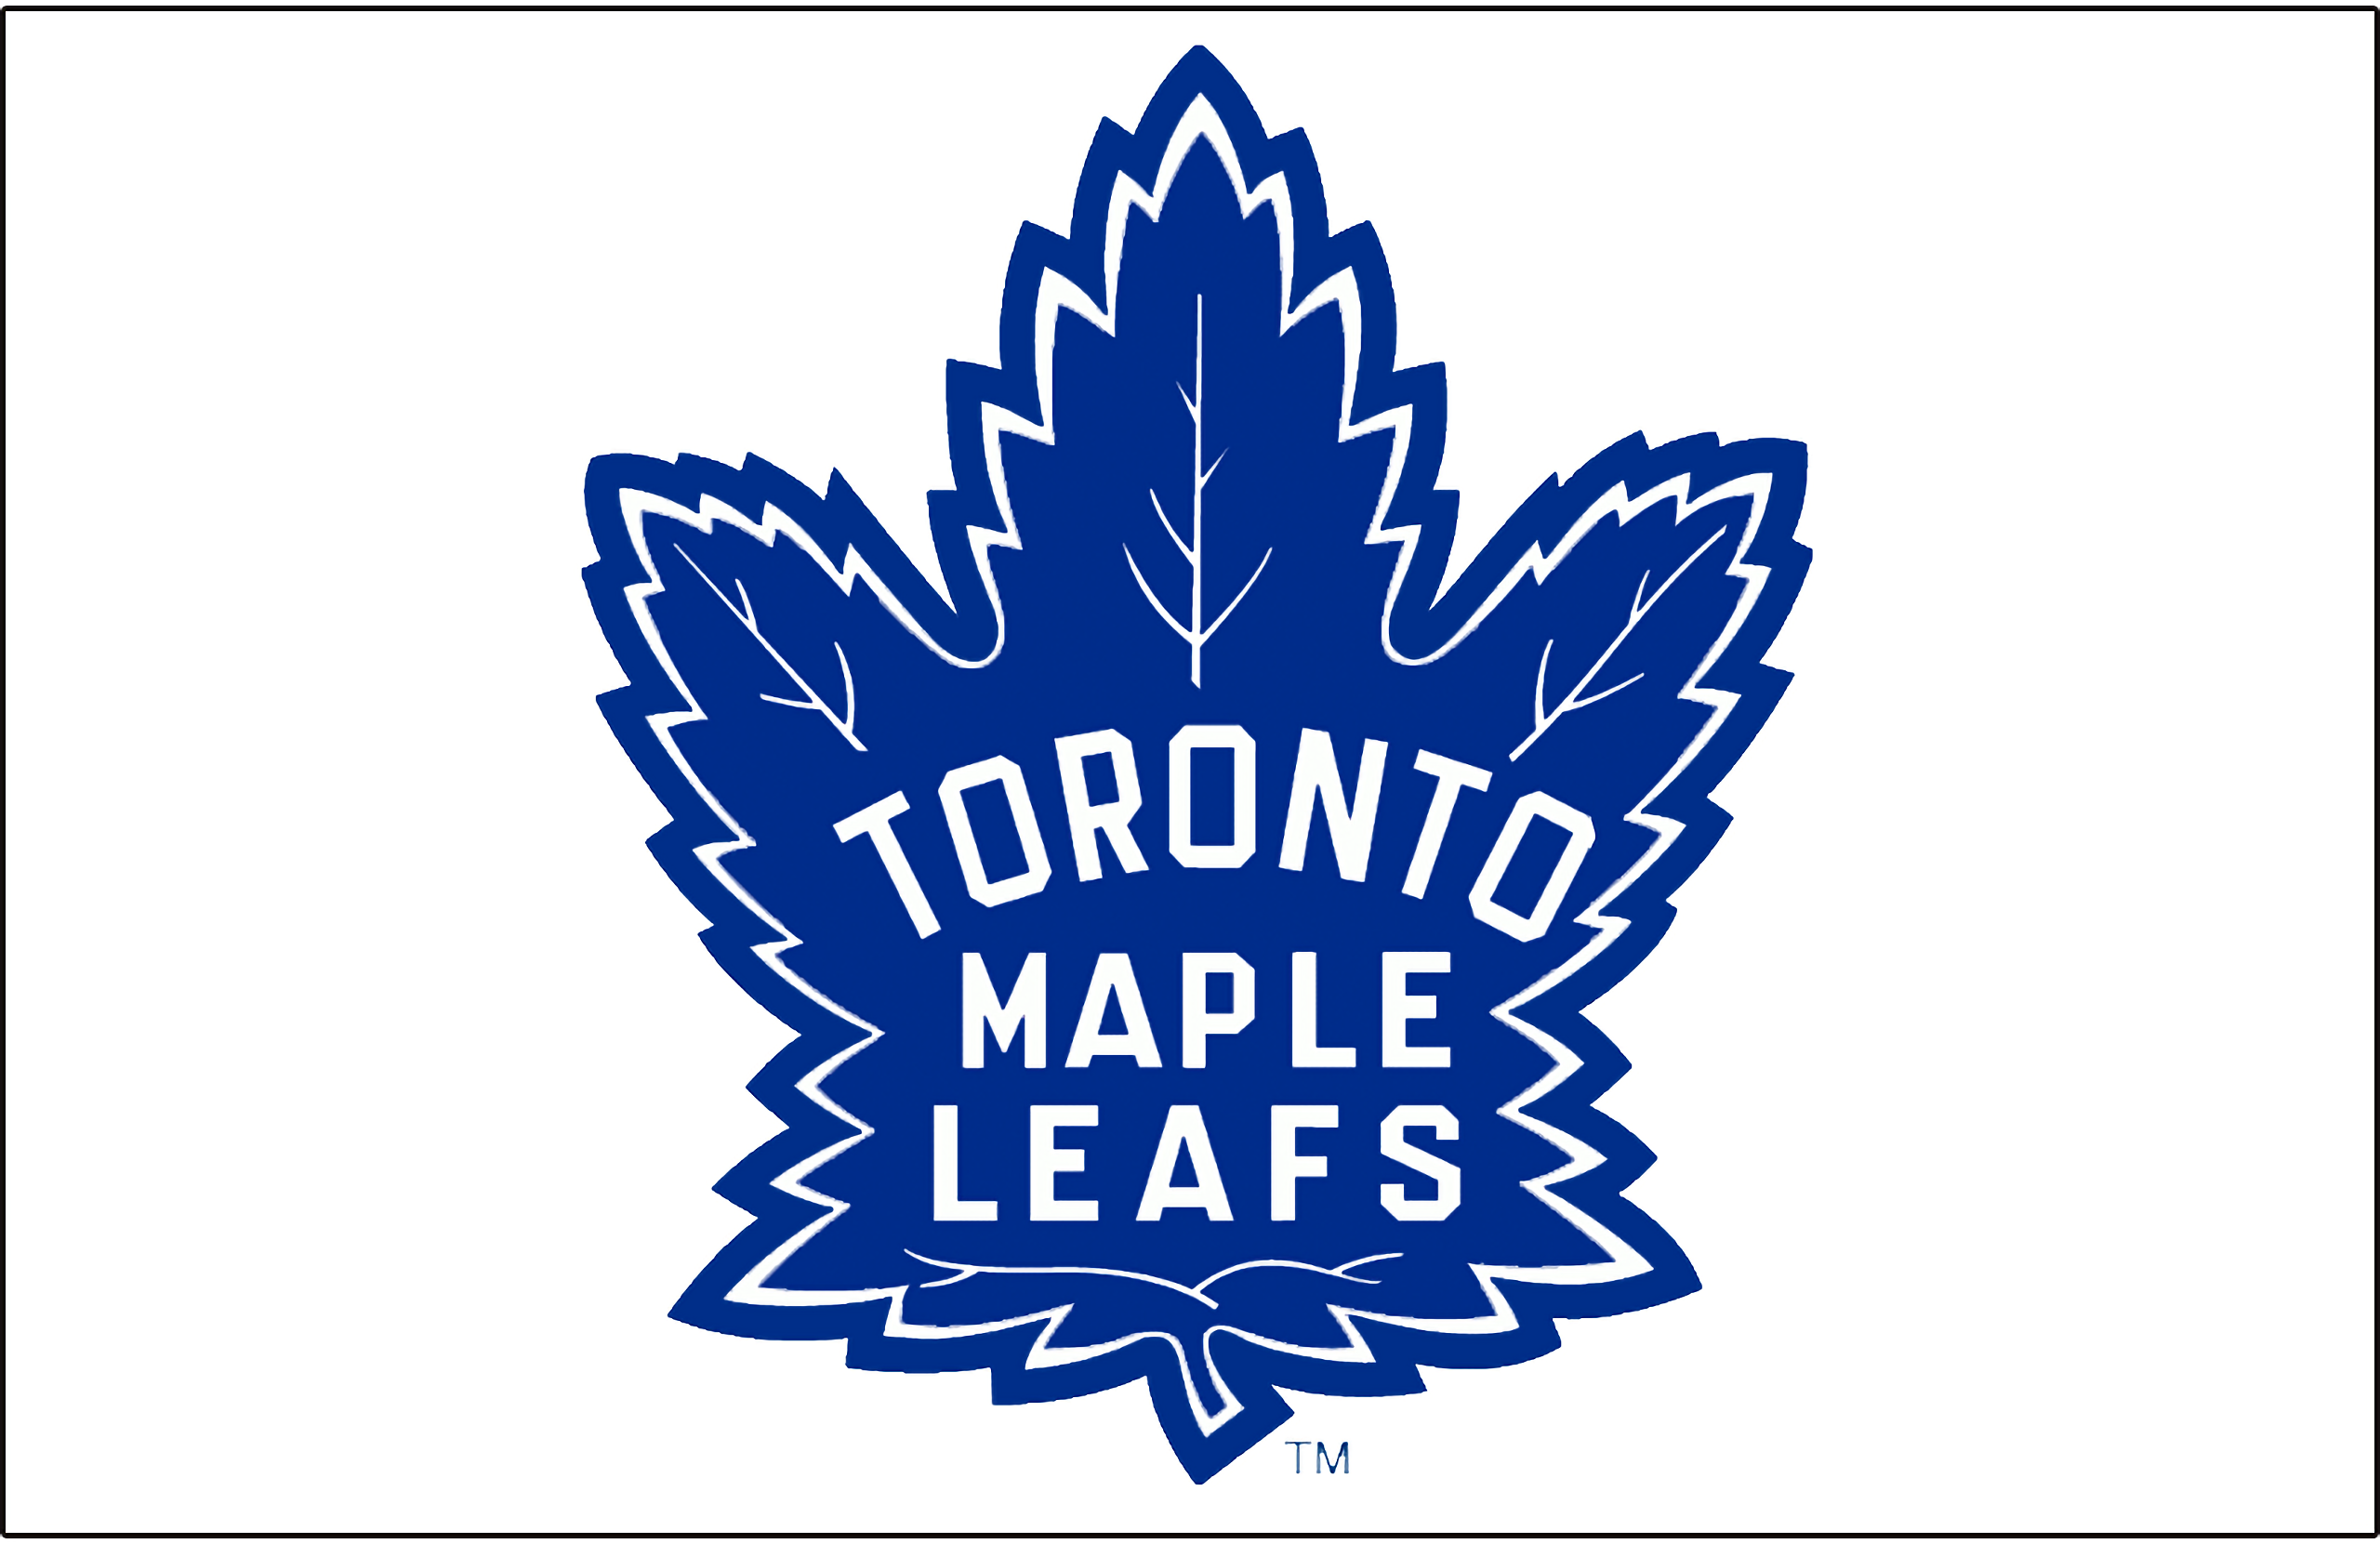 Toronto Maple Leafs 2560x1661